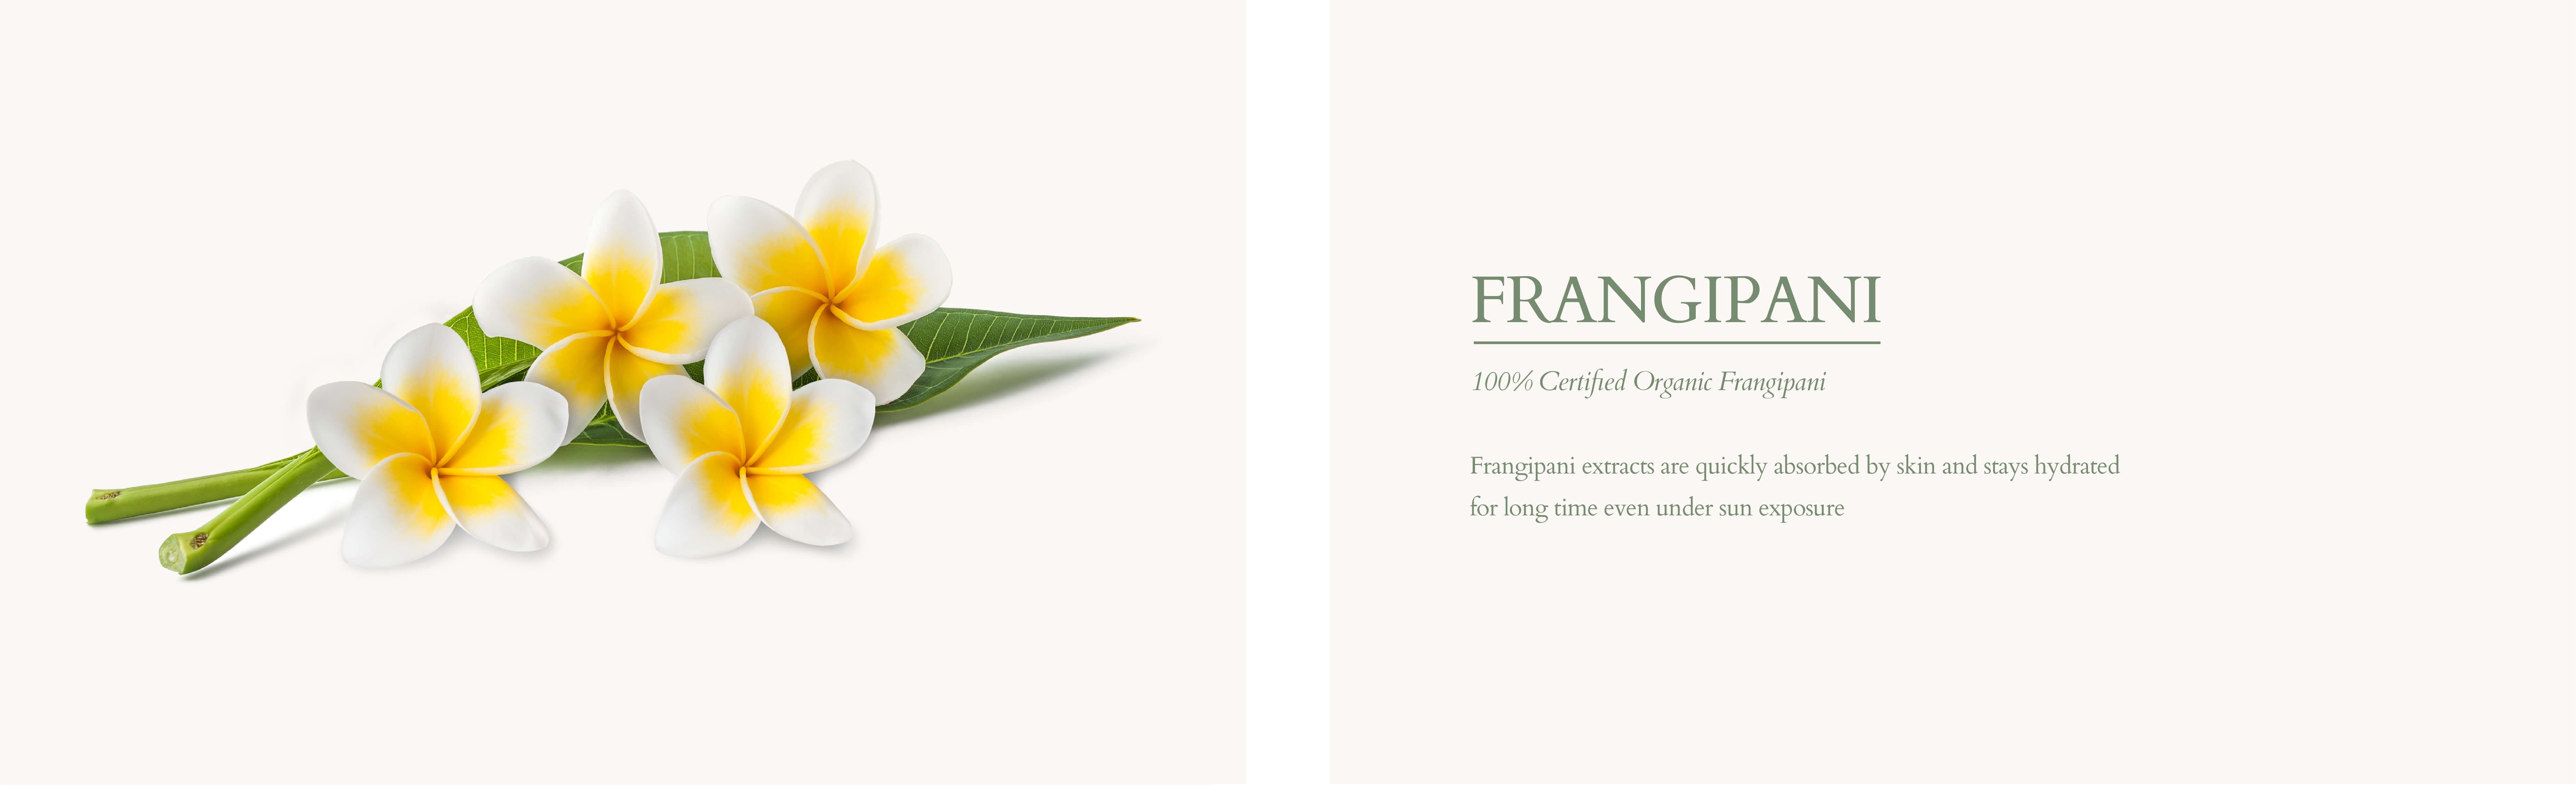 Organic frangipani for skin 764a67bf 9542 44bd 984a 465f86b70f3b